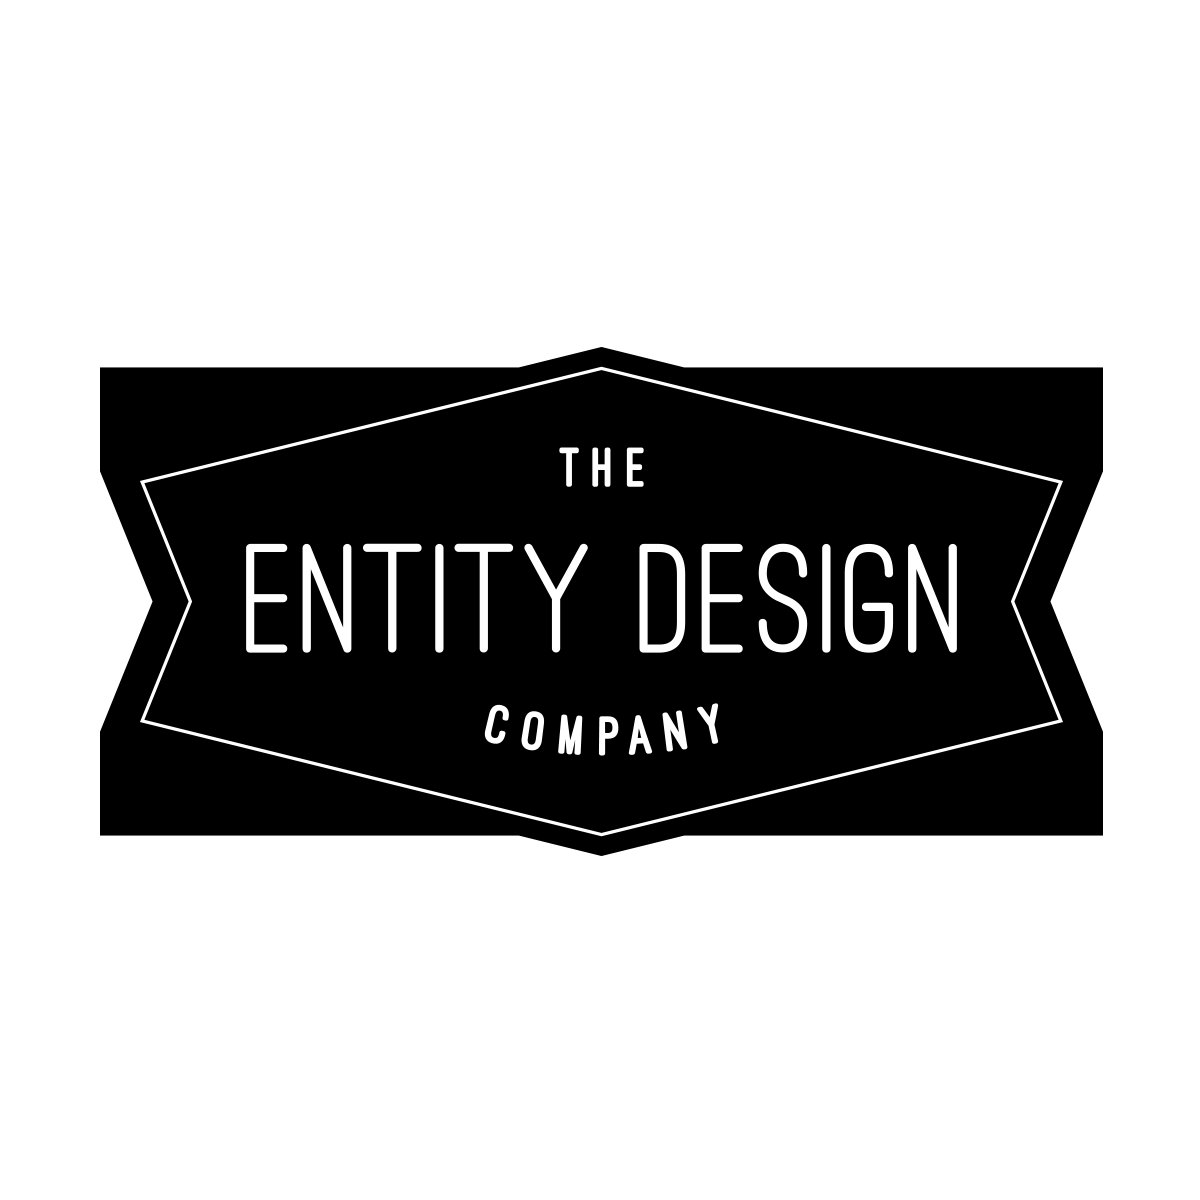 The smallest design company in the world.